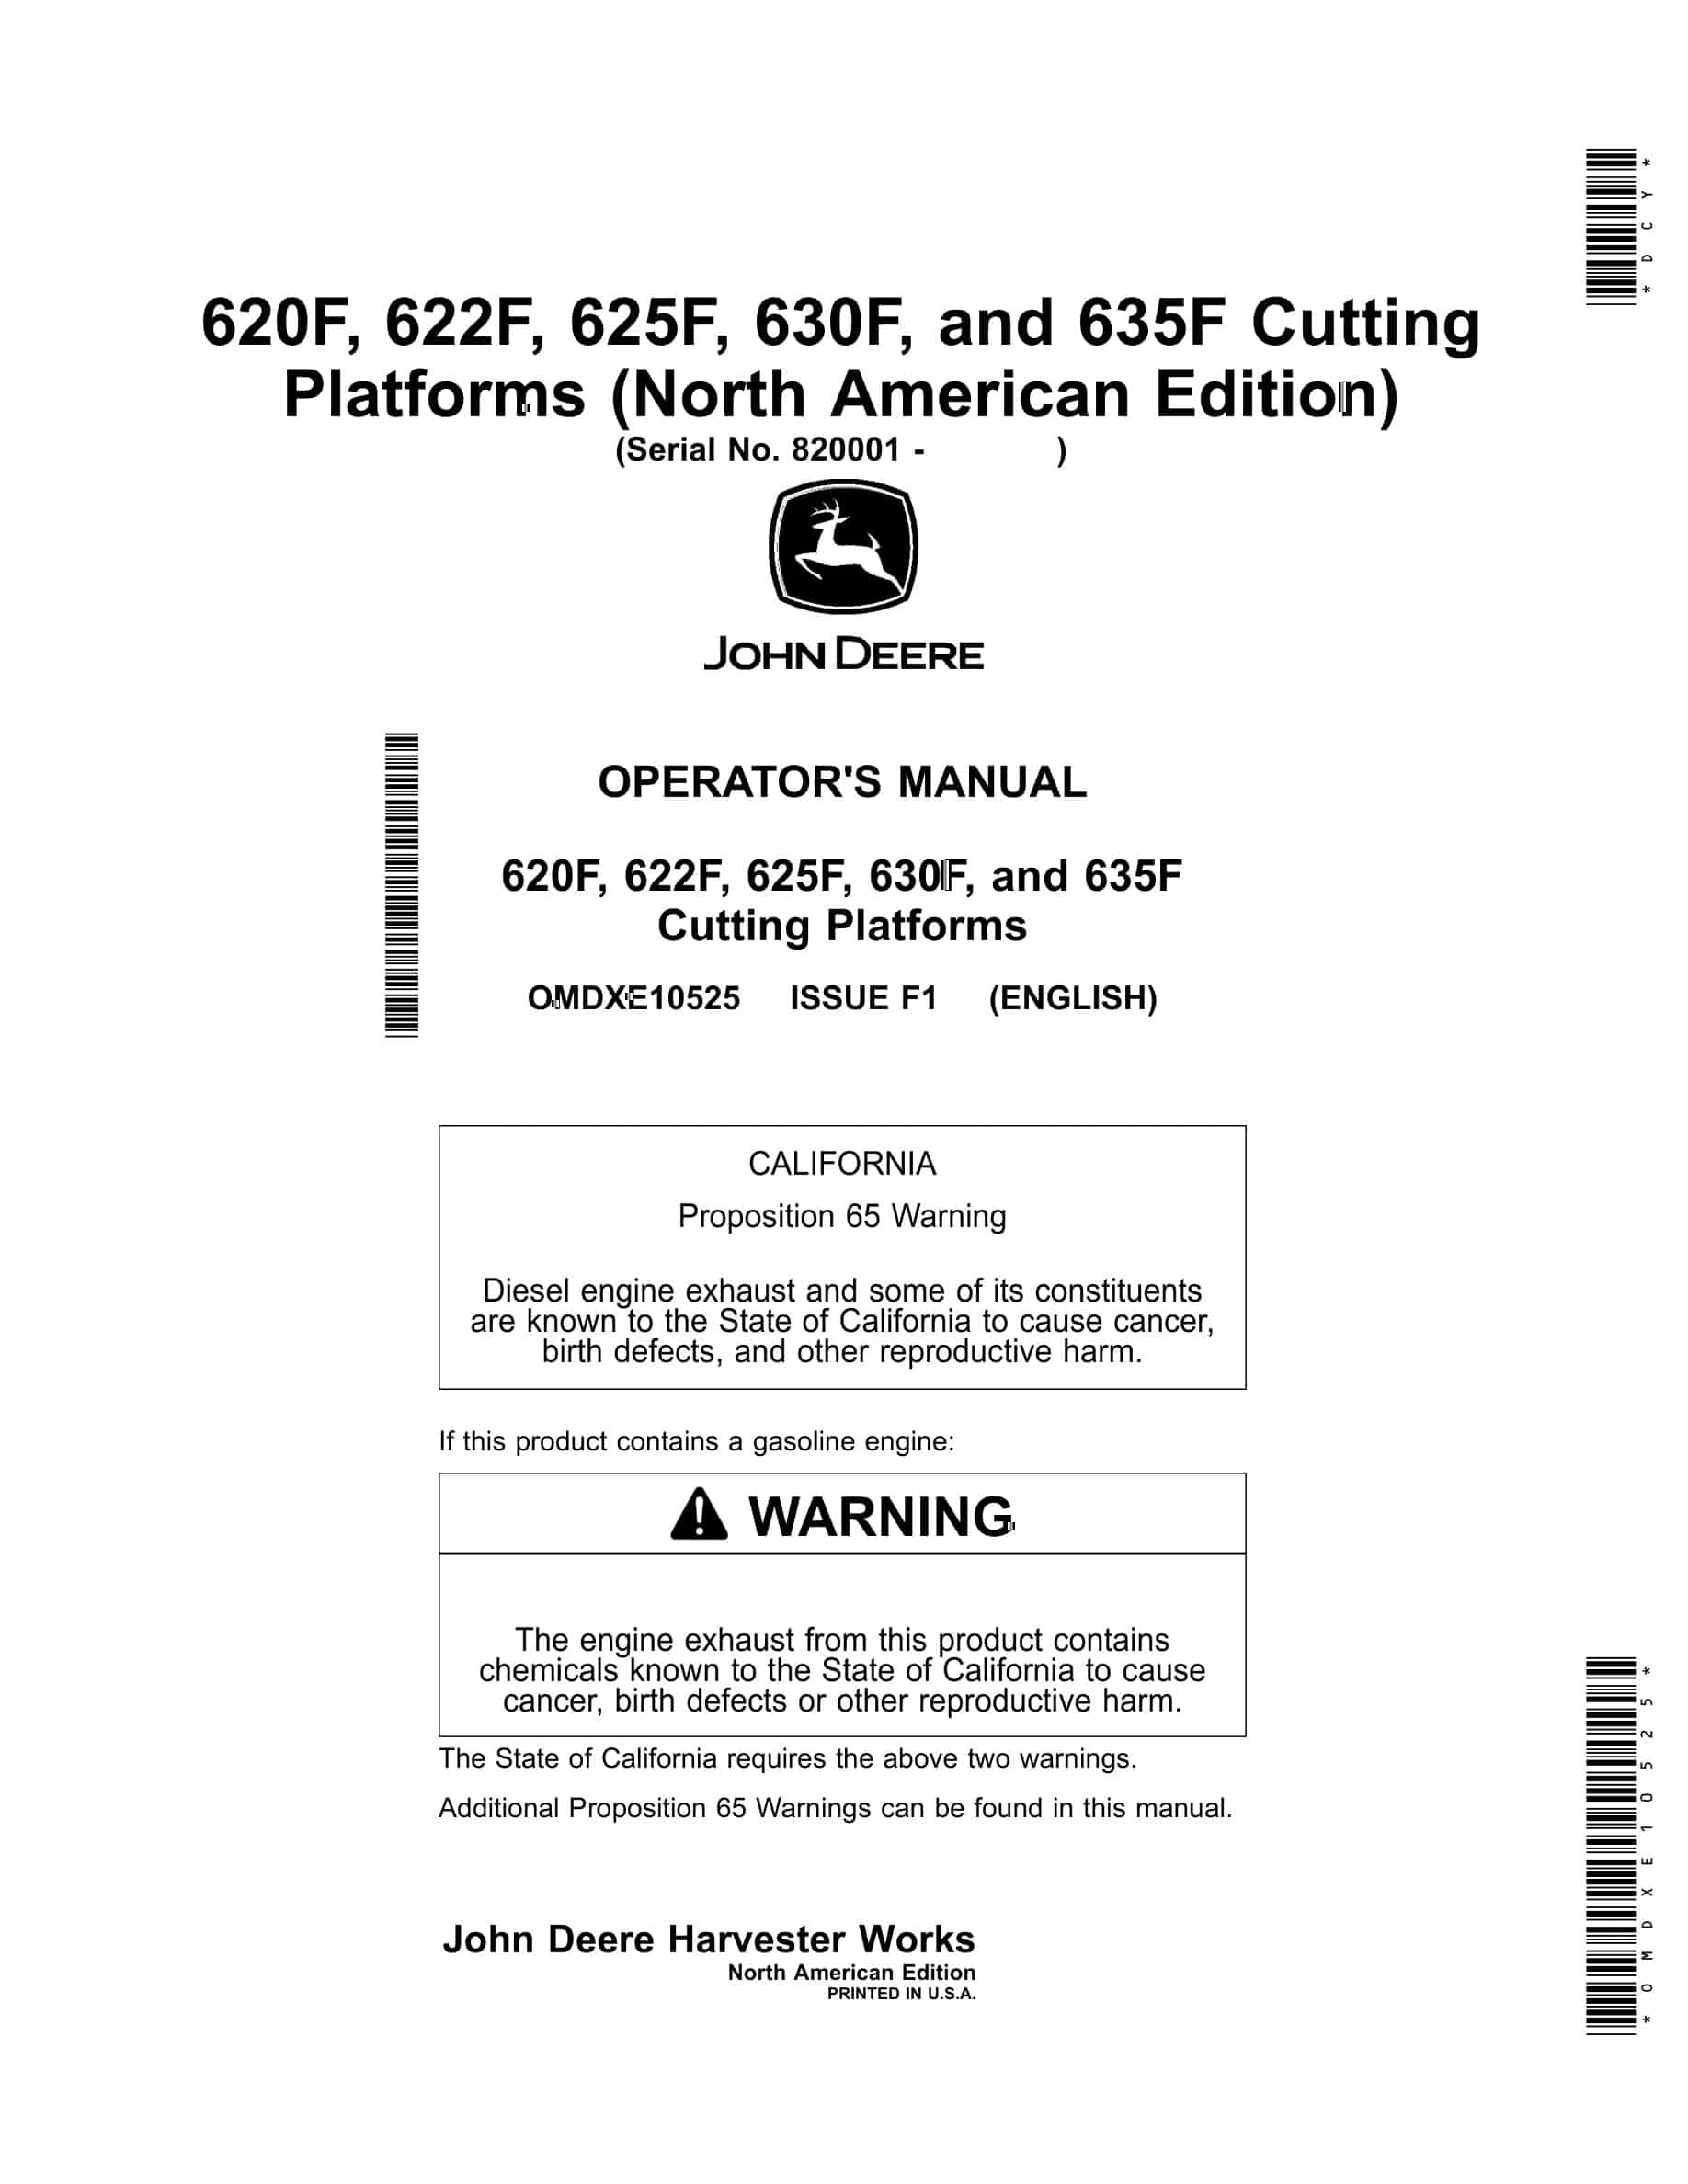 John Deere 620F, 622F, 625F, 630F, and 635F Cutting Platforms Operator Manual OMDXE10525-1